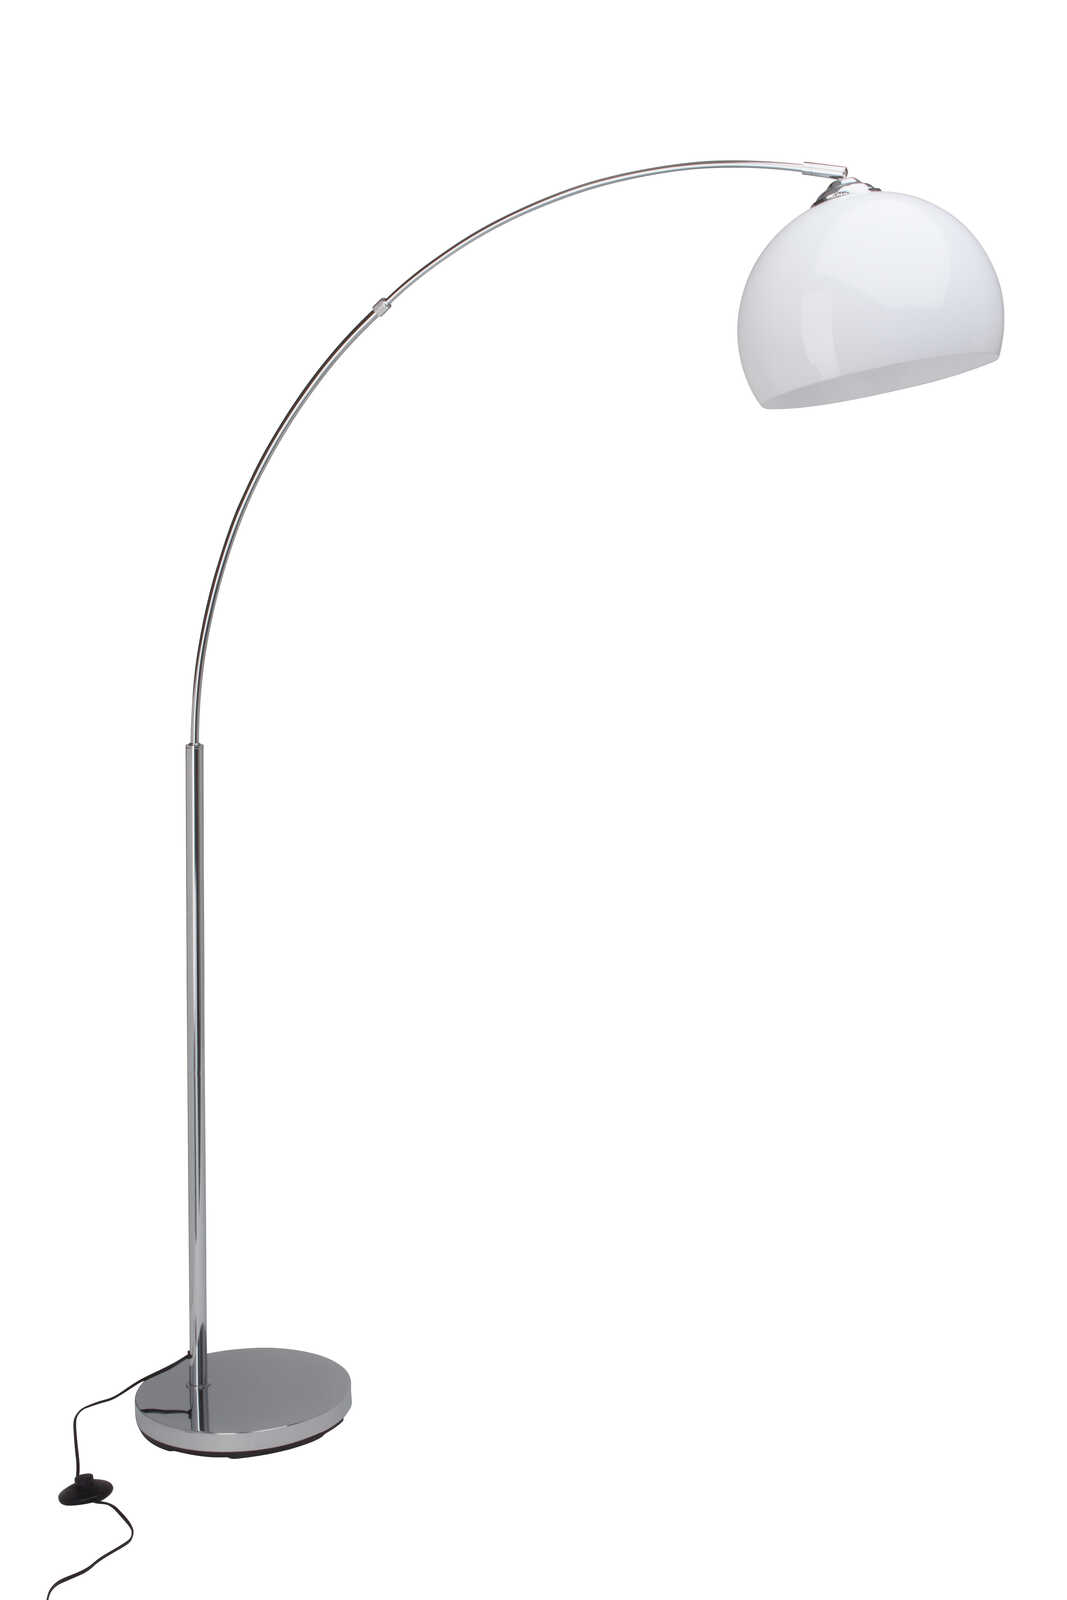             Plastic arc floor lamp - Swantje - Metallic
        